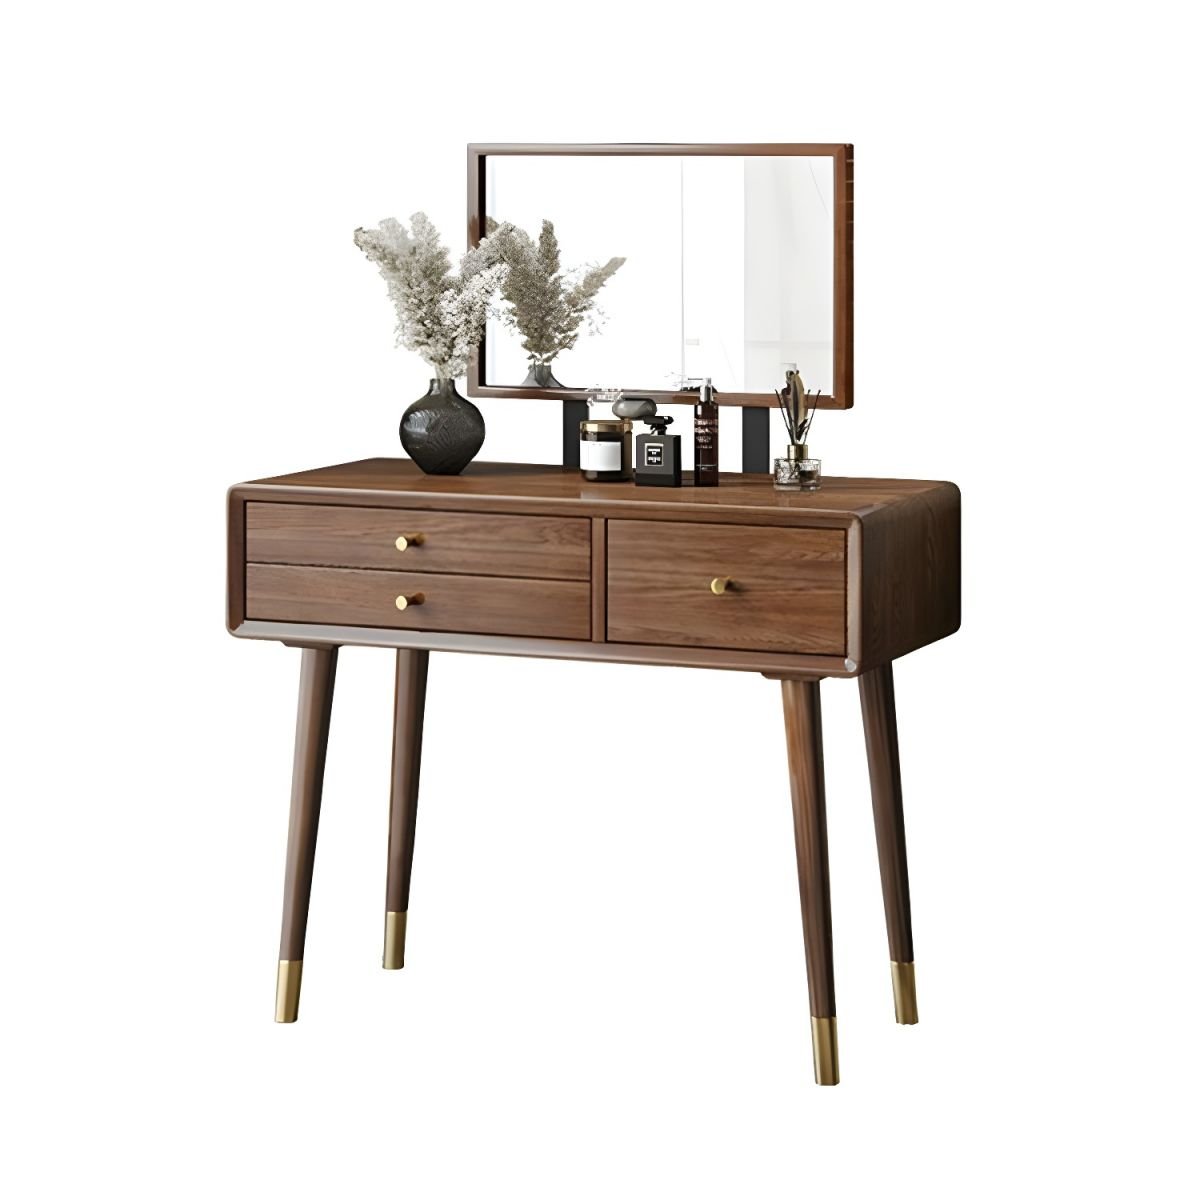 Auburn Modern Simple Style Dressing Table Standard Timber with Adjustable Mirror, Makeup Vanity & Mirror